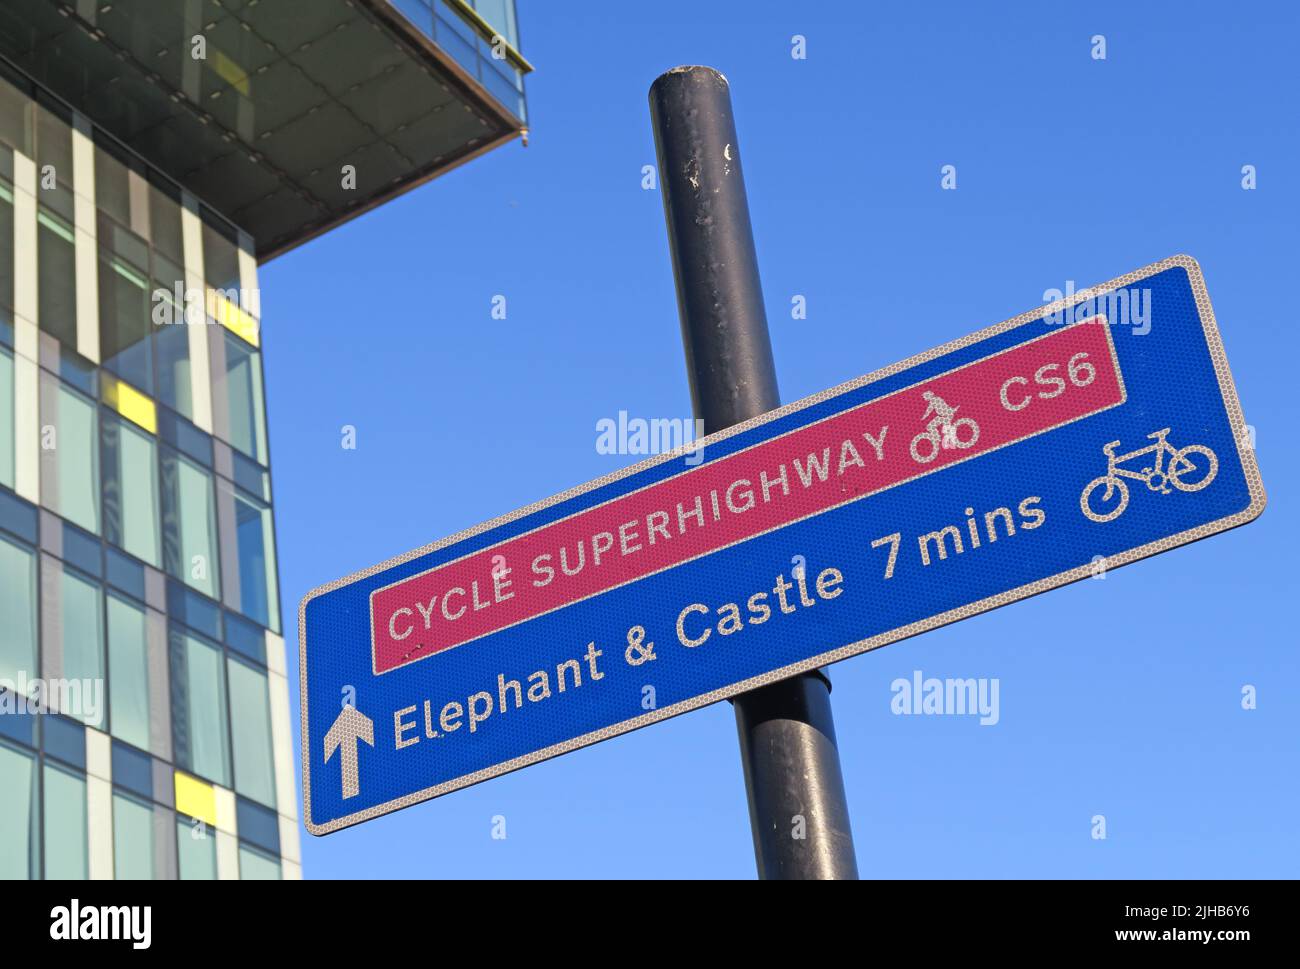 London Cycle Superhighway , CS6 to the Elephant Castle, 7 mins sign, England, UK Stock Photo